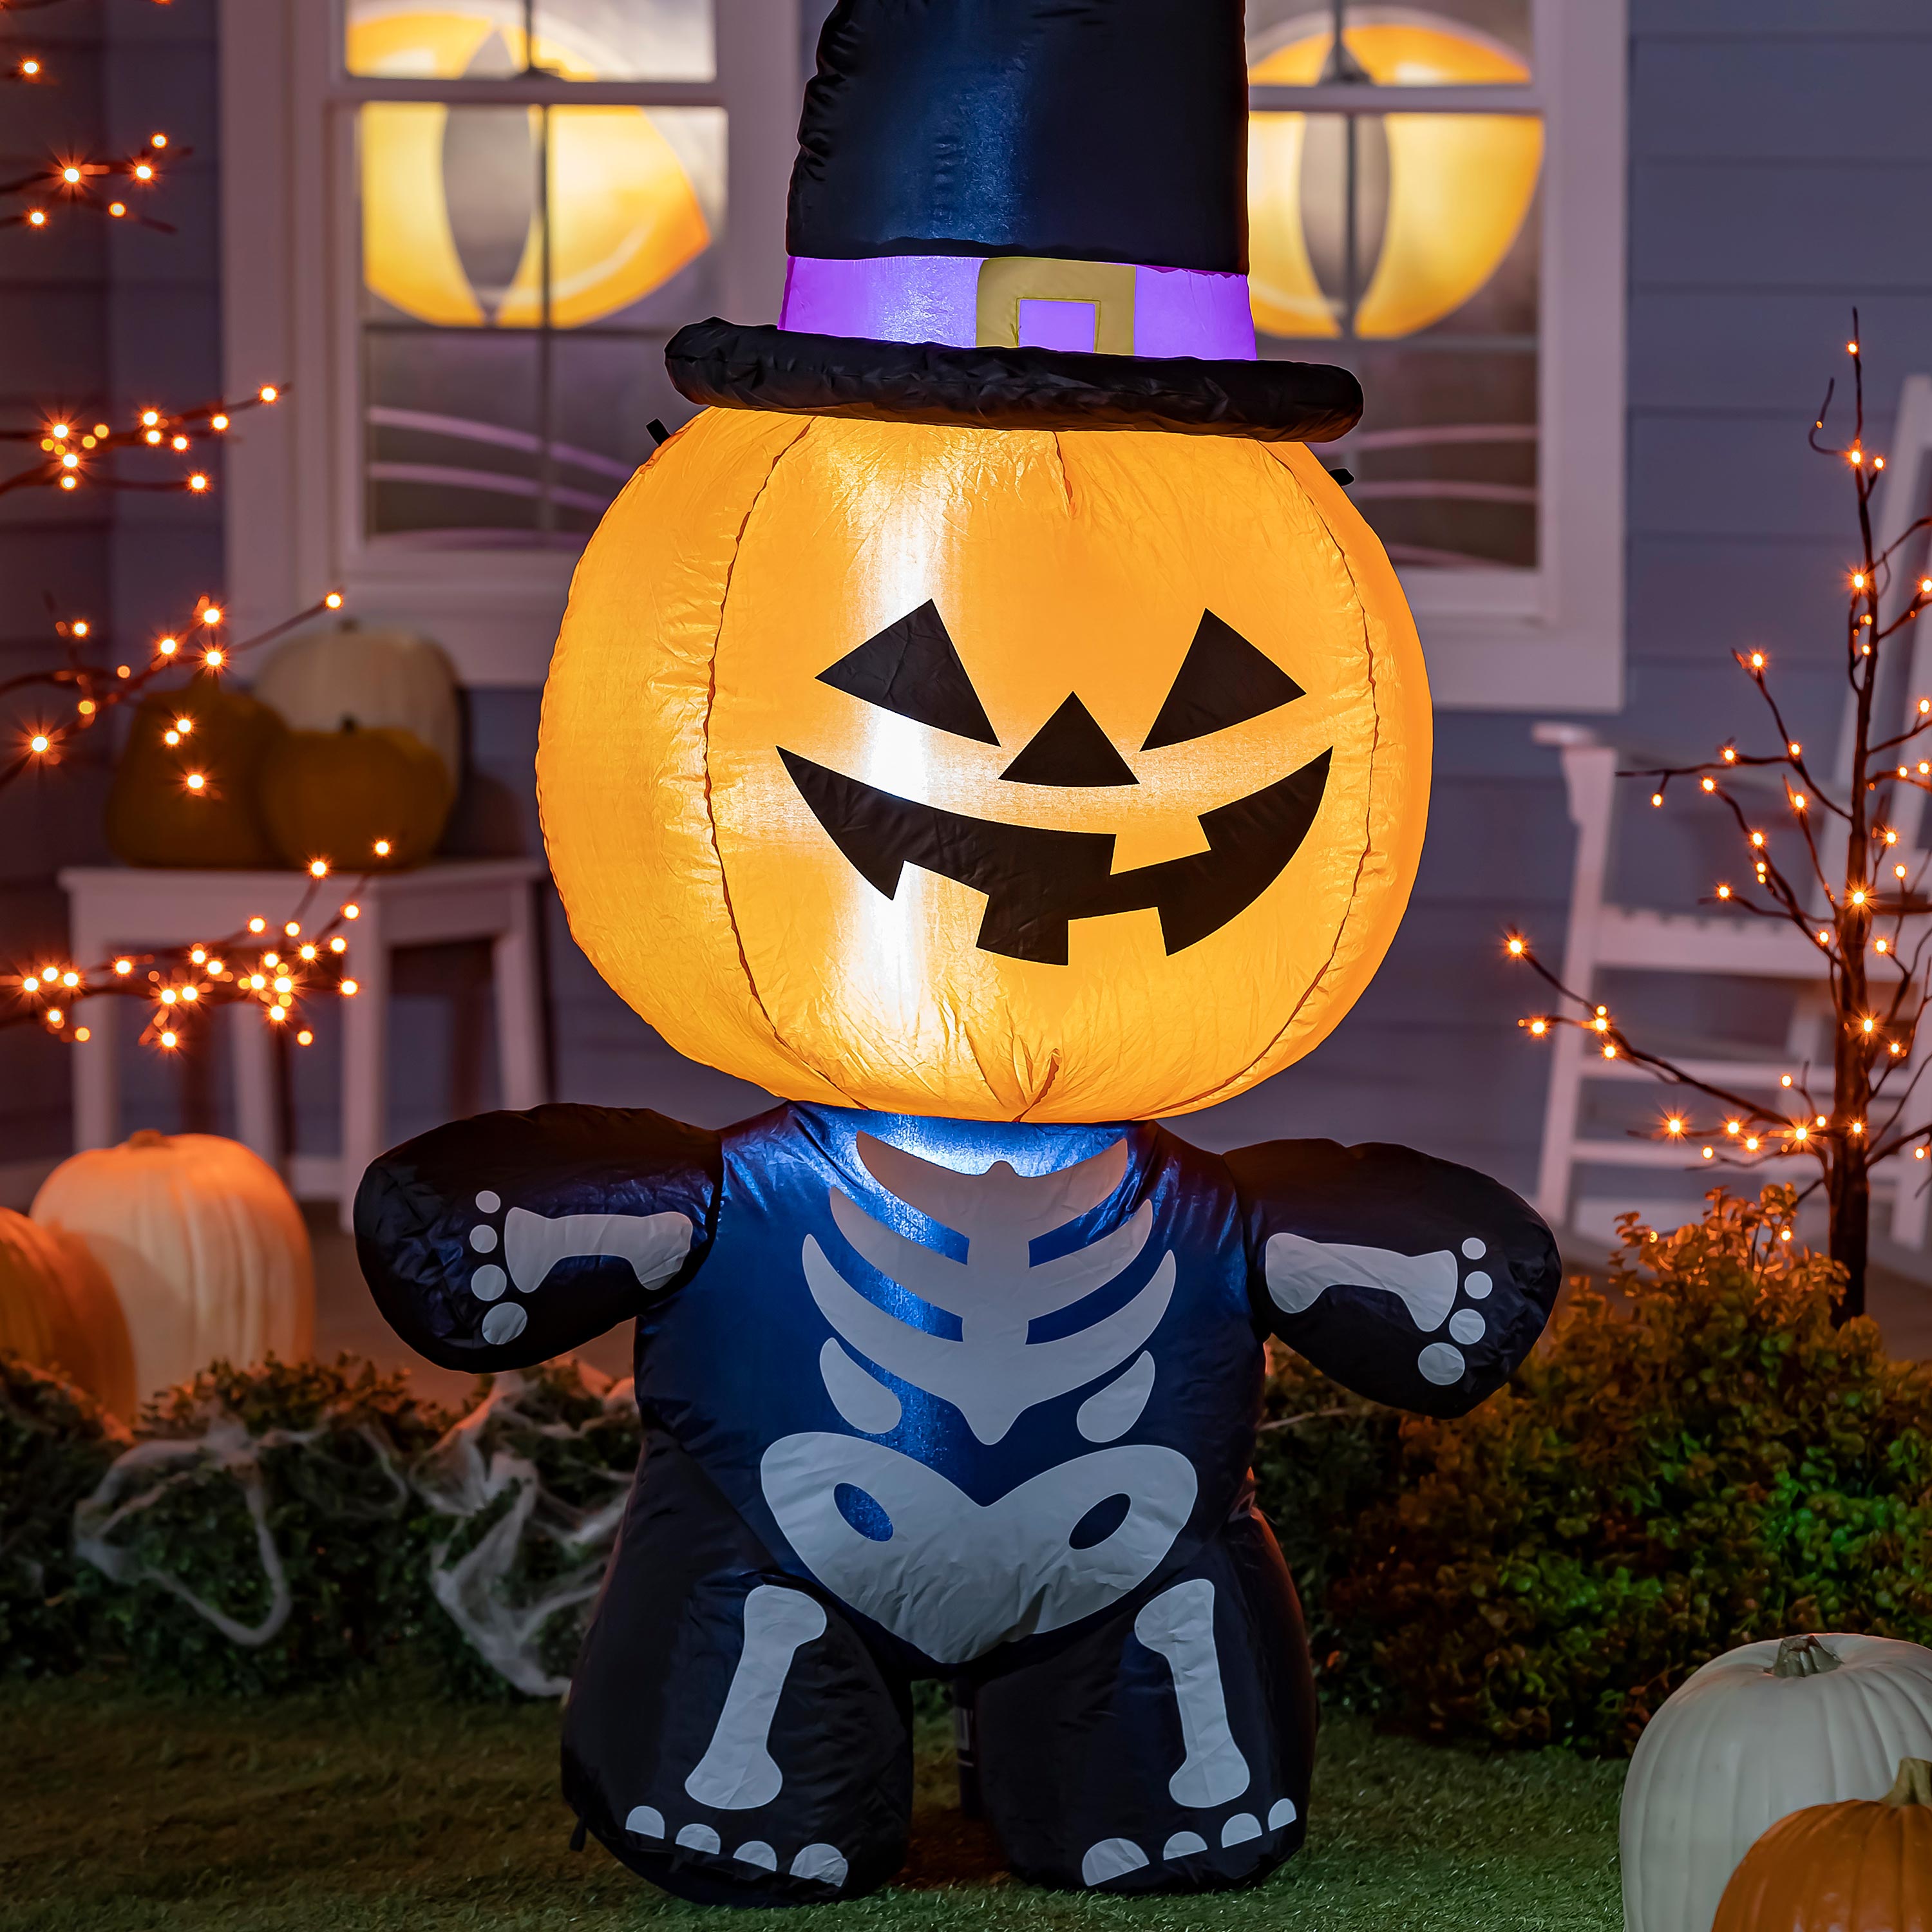 Jack-O-Lantern Skeleton Halloween Inflatable | Plow & Hearth